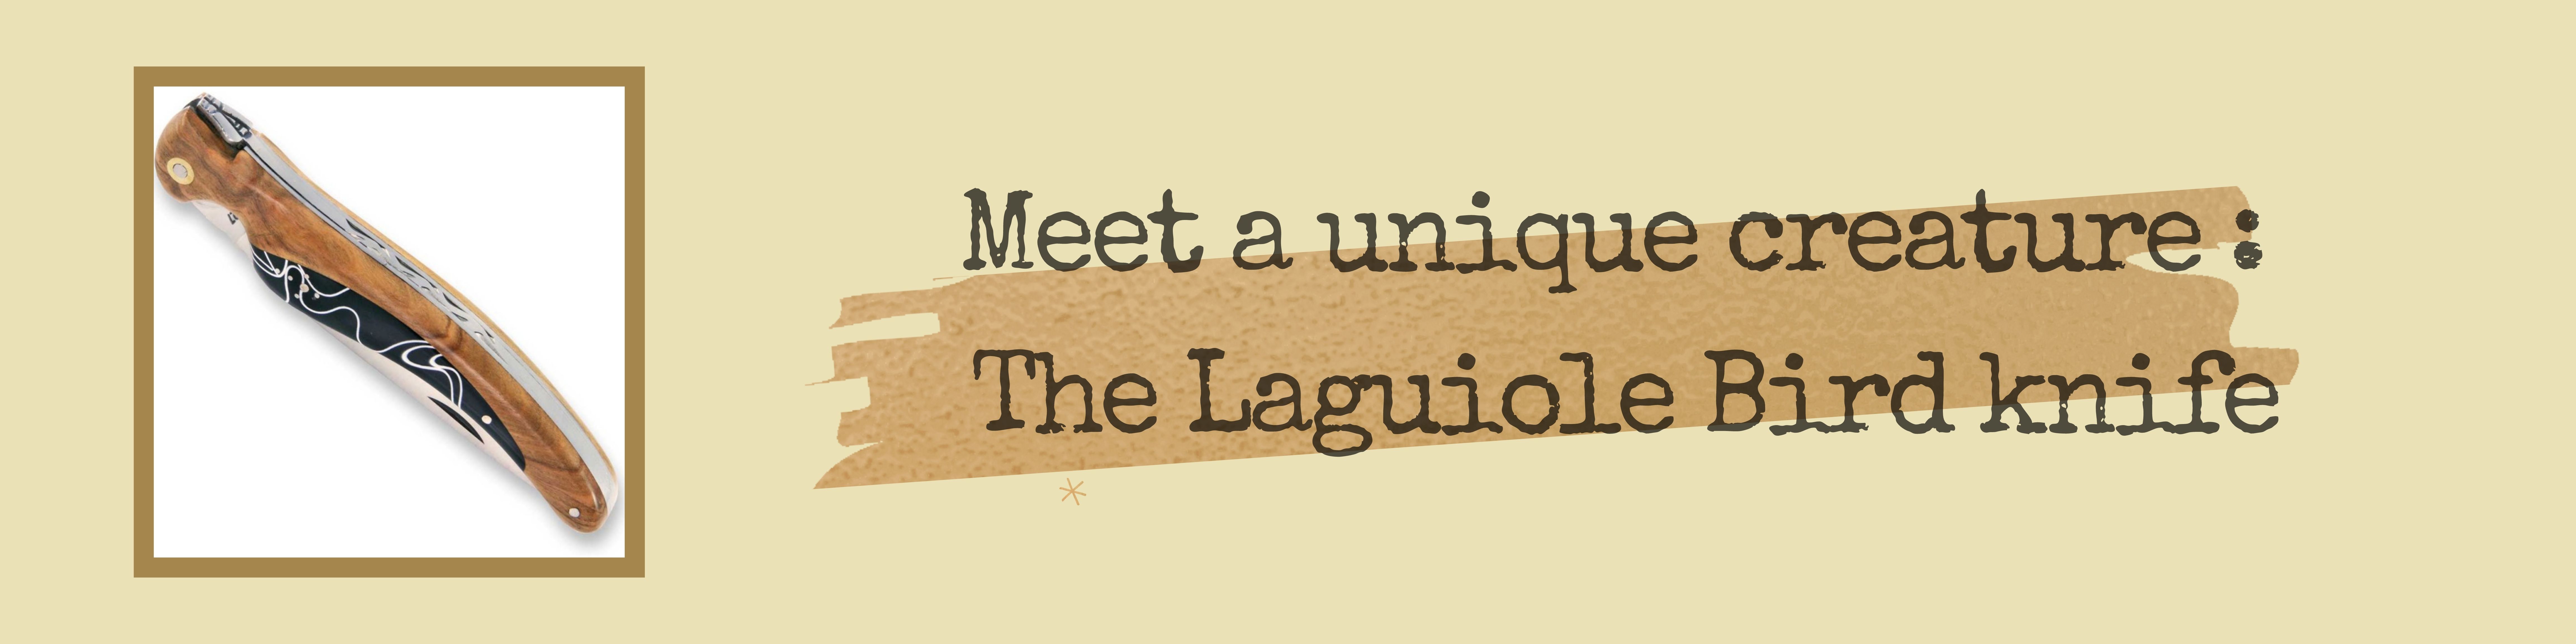 Meet a unique creature - The Laguiole Bird knife